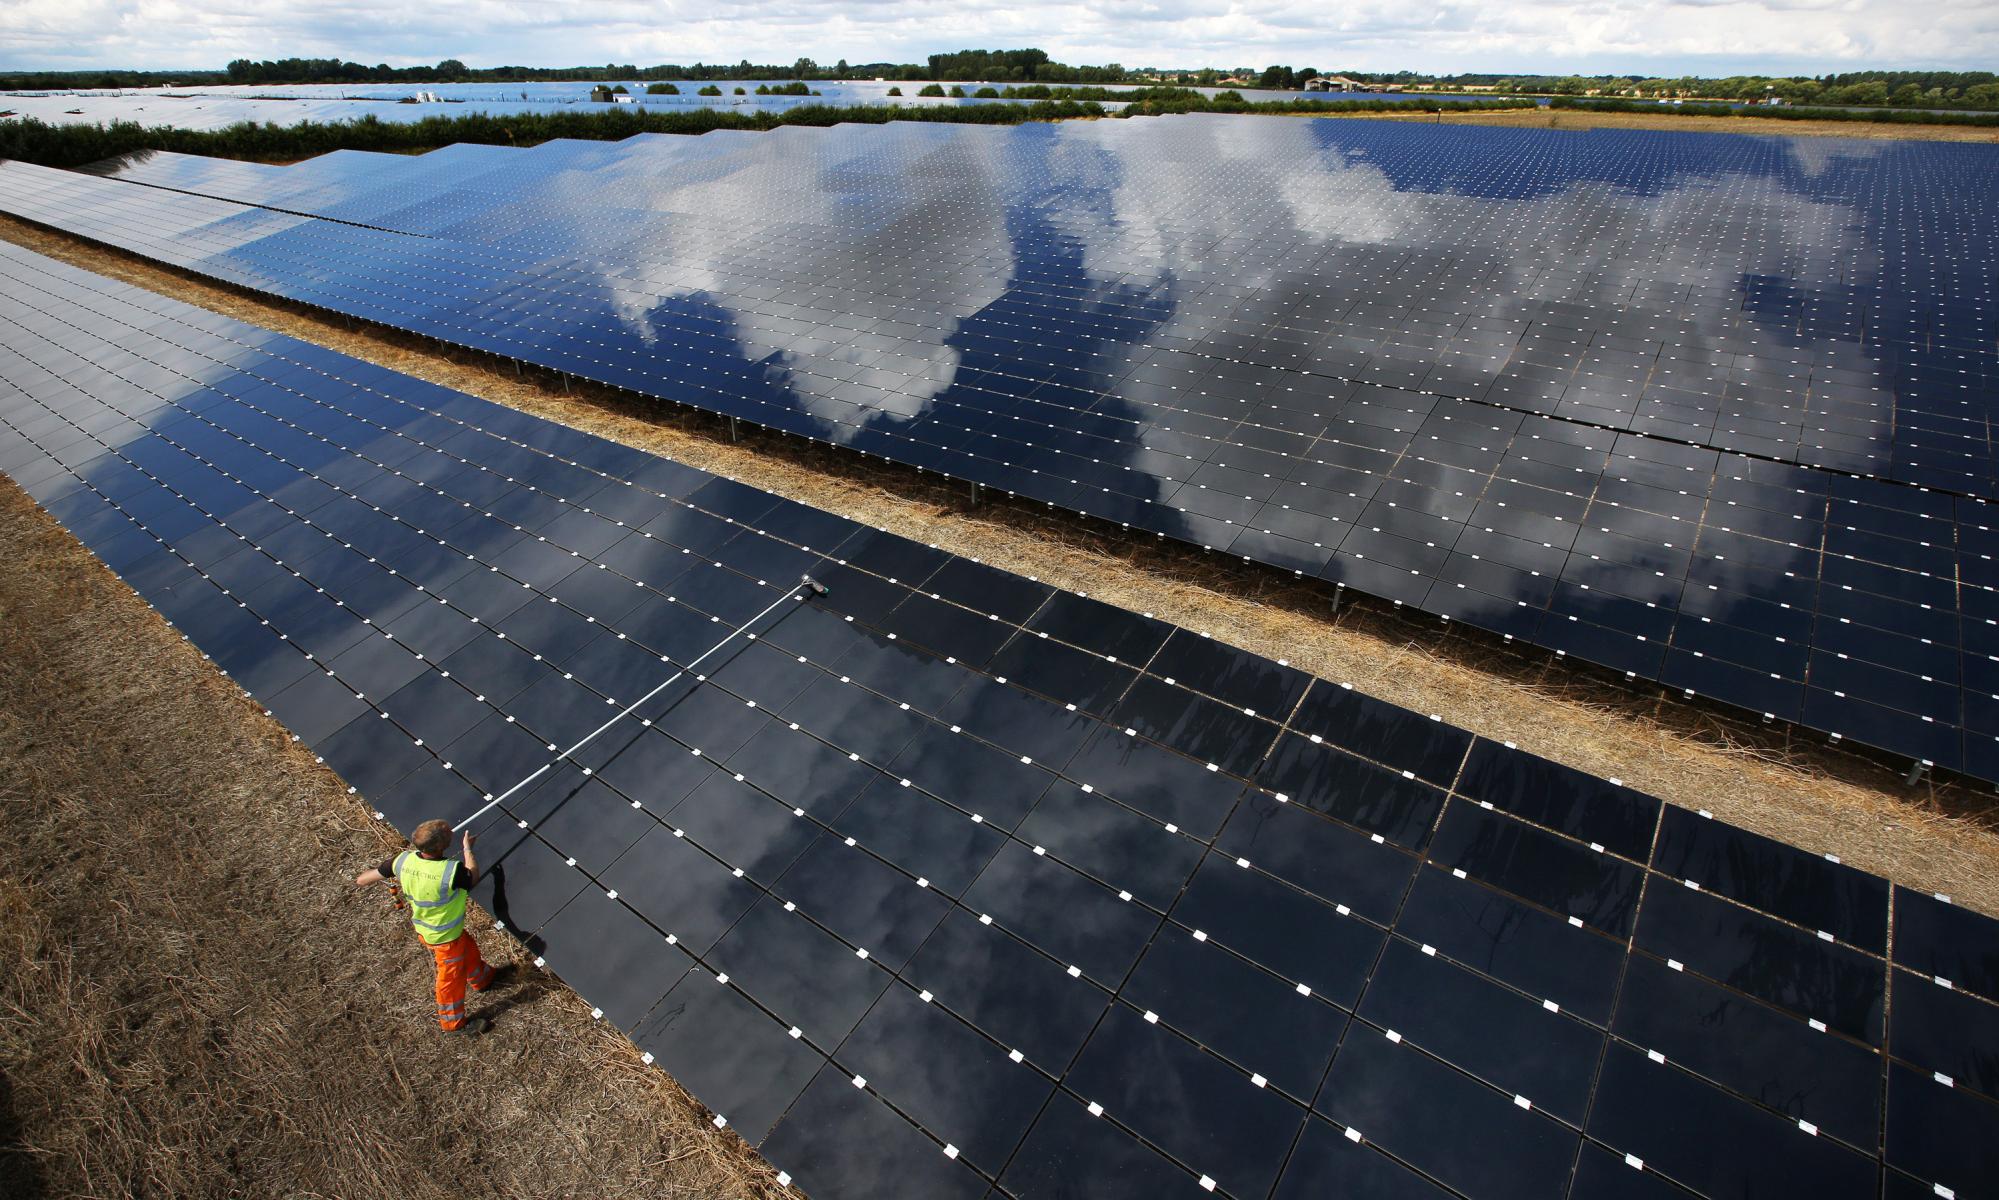 Light … or blight? Anger rises at plan for Britain’s biggest solar farm